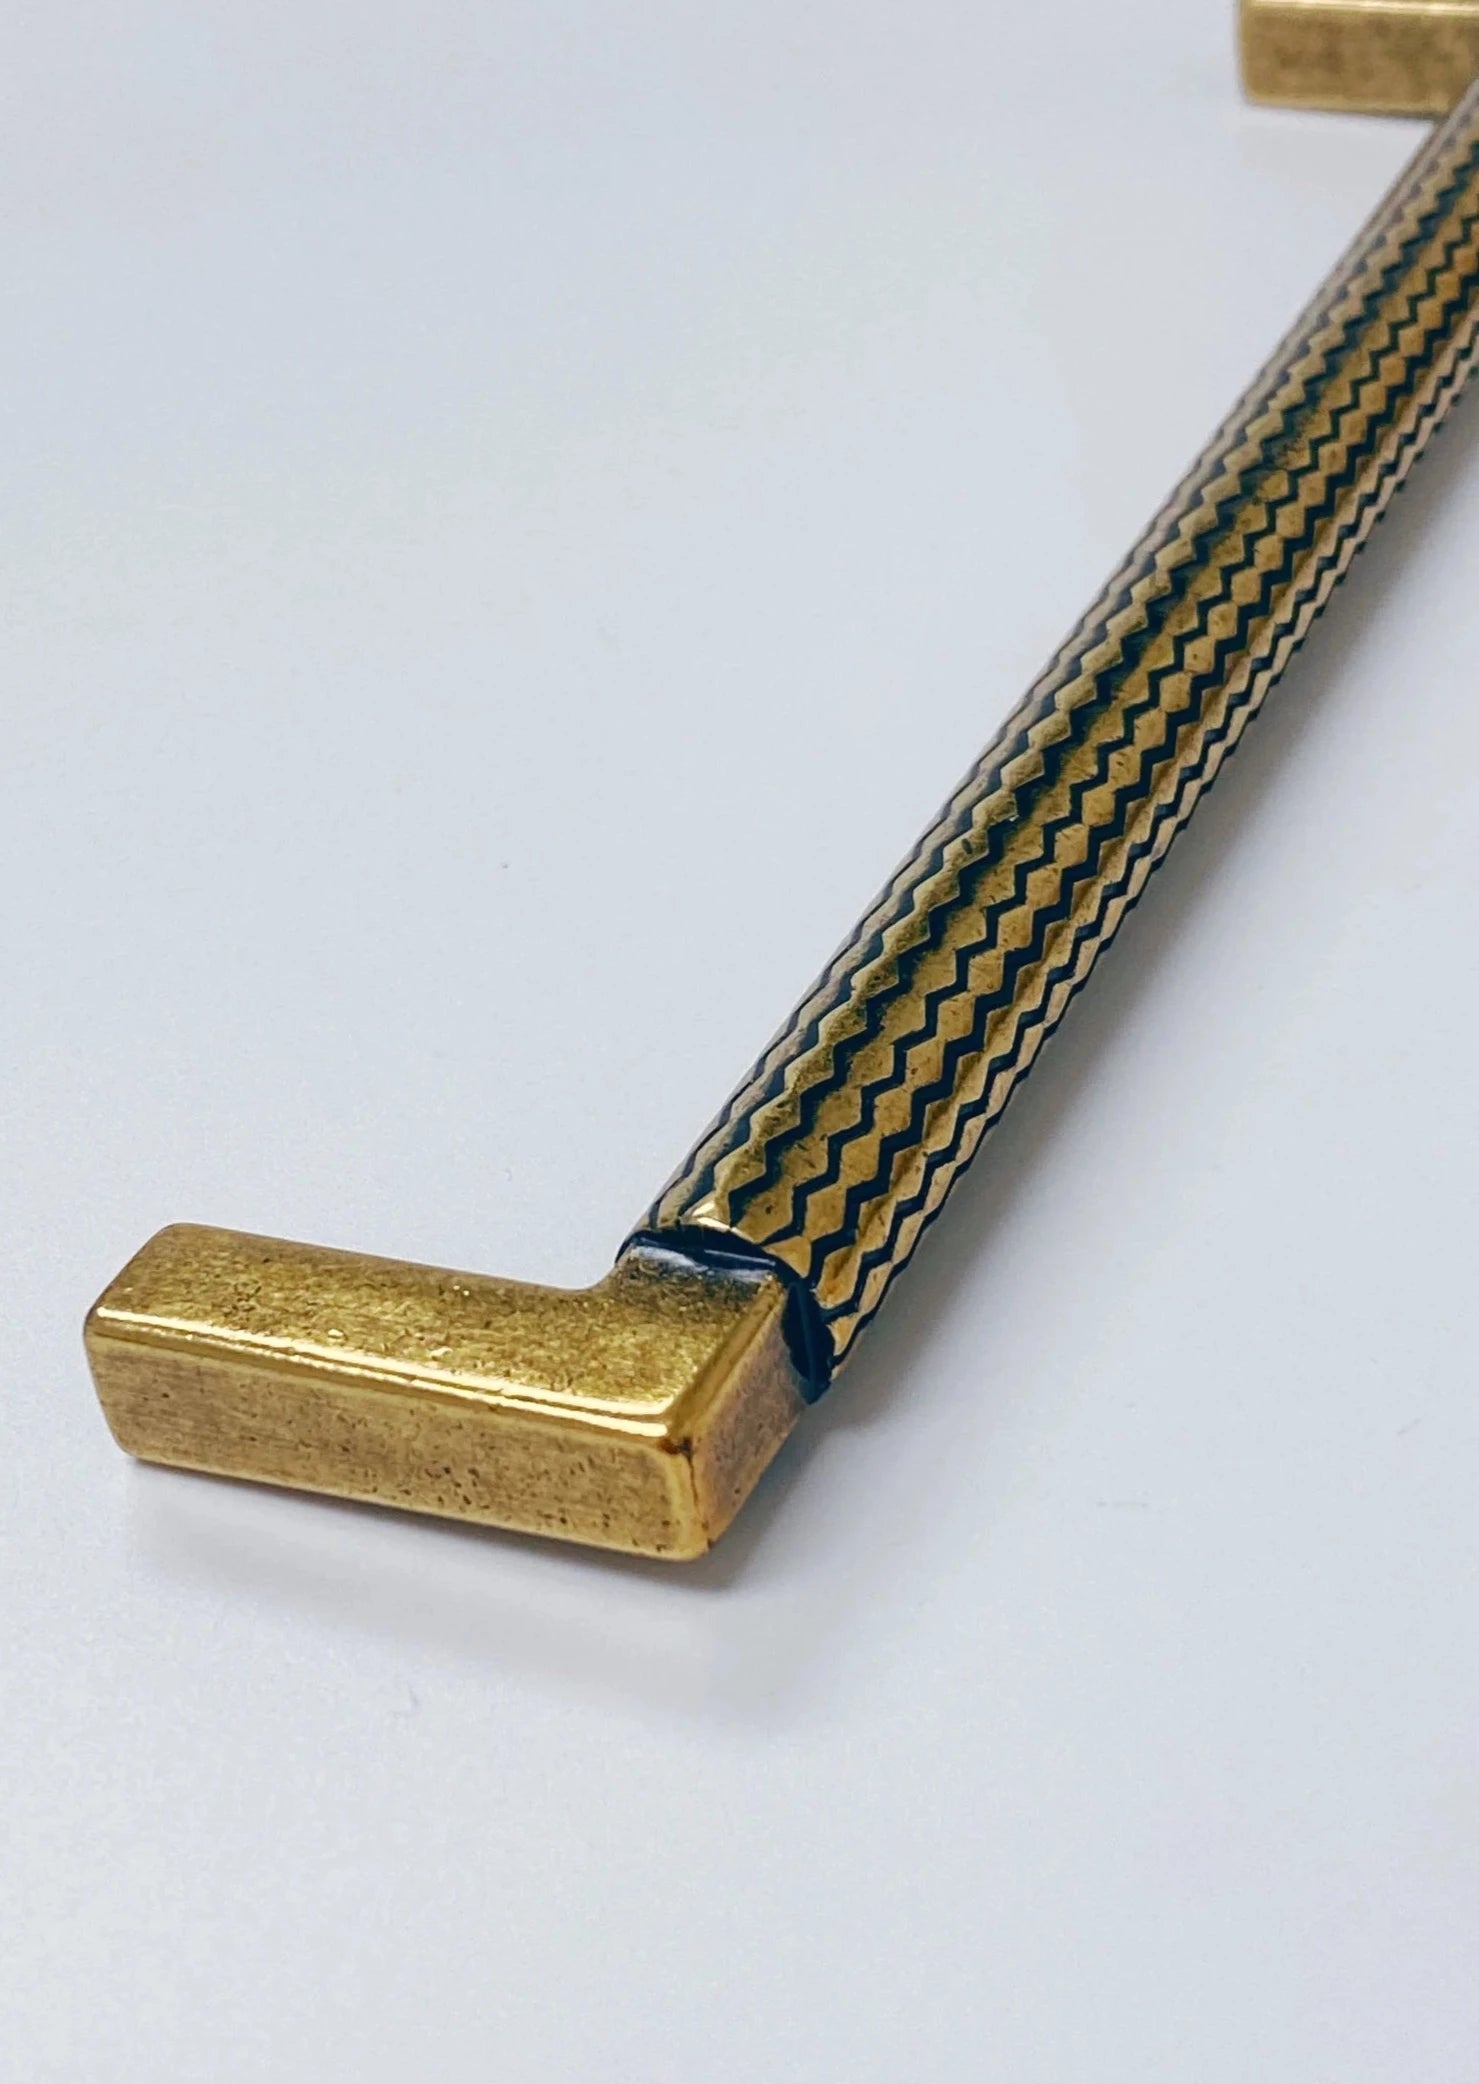 U-Shaped "Venice" Drawer Pull in Antique Brass - Brass Cabinet Hardware | Pulls